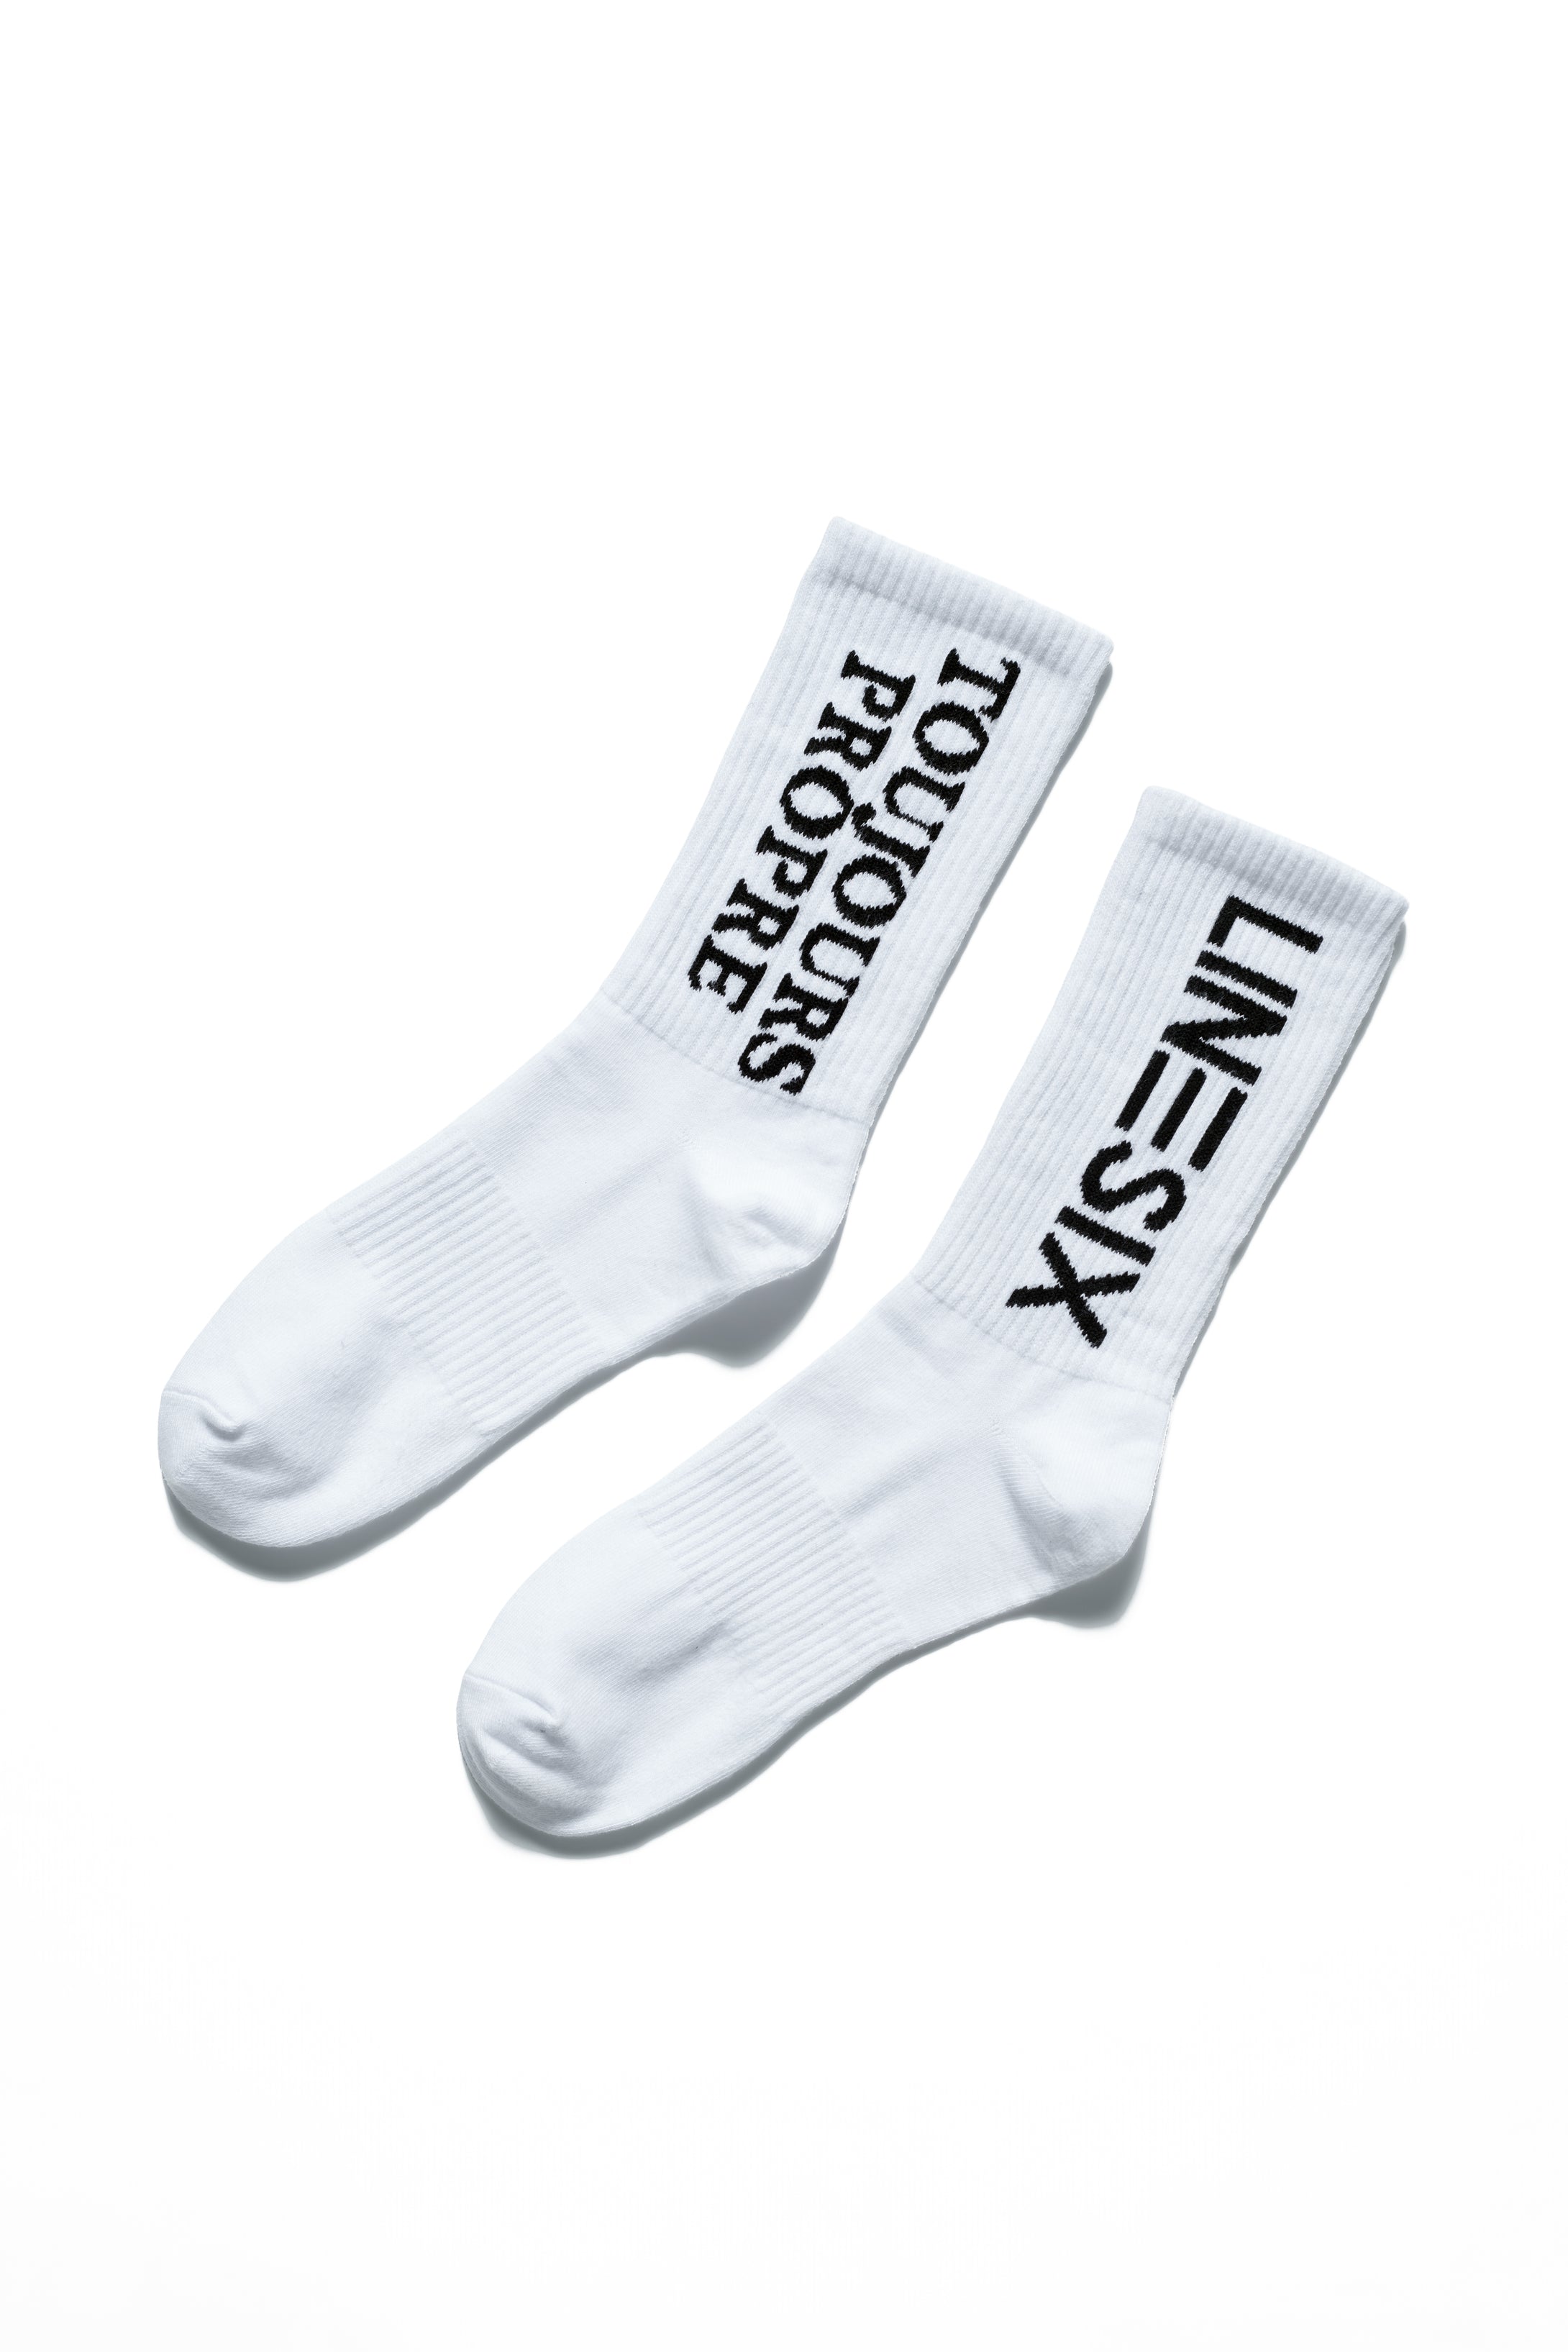 Linesix Clothing x Toujours Propre Socks